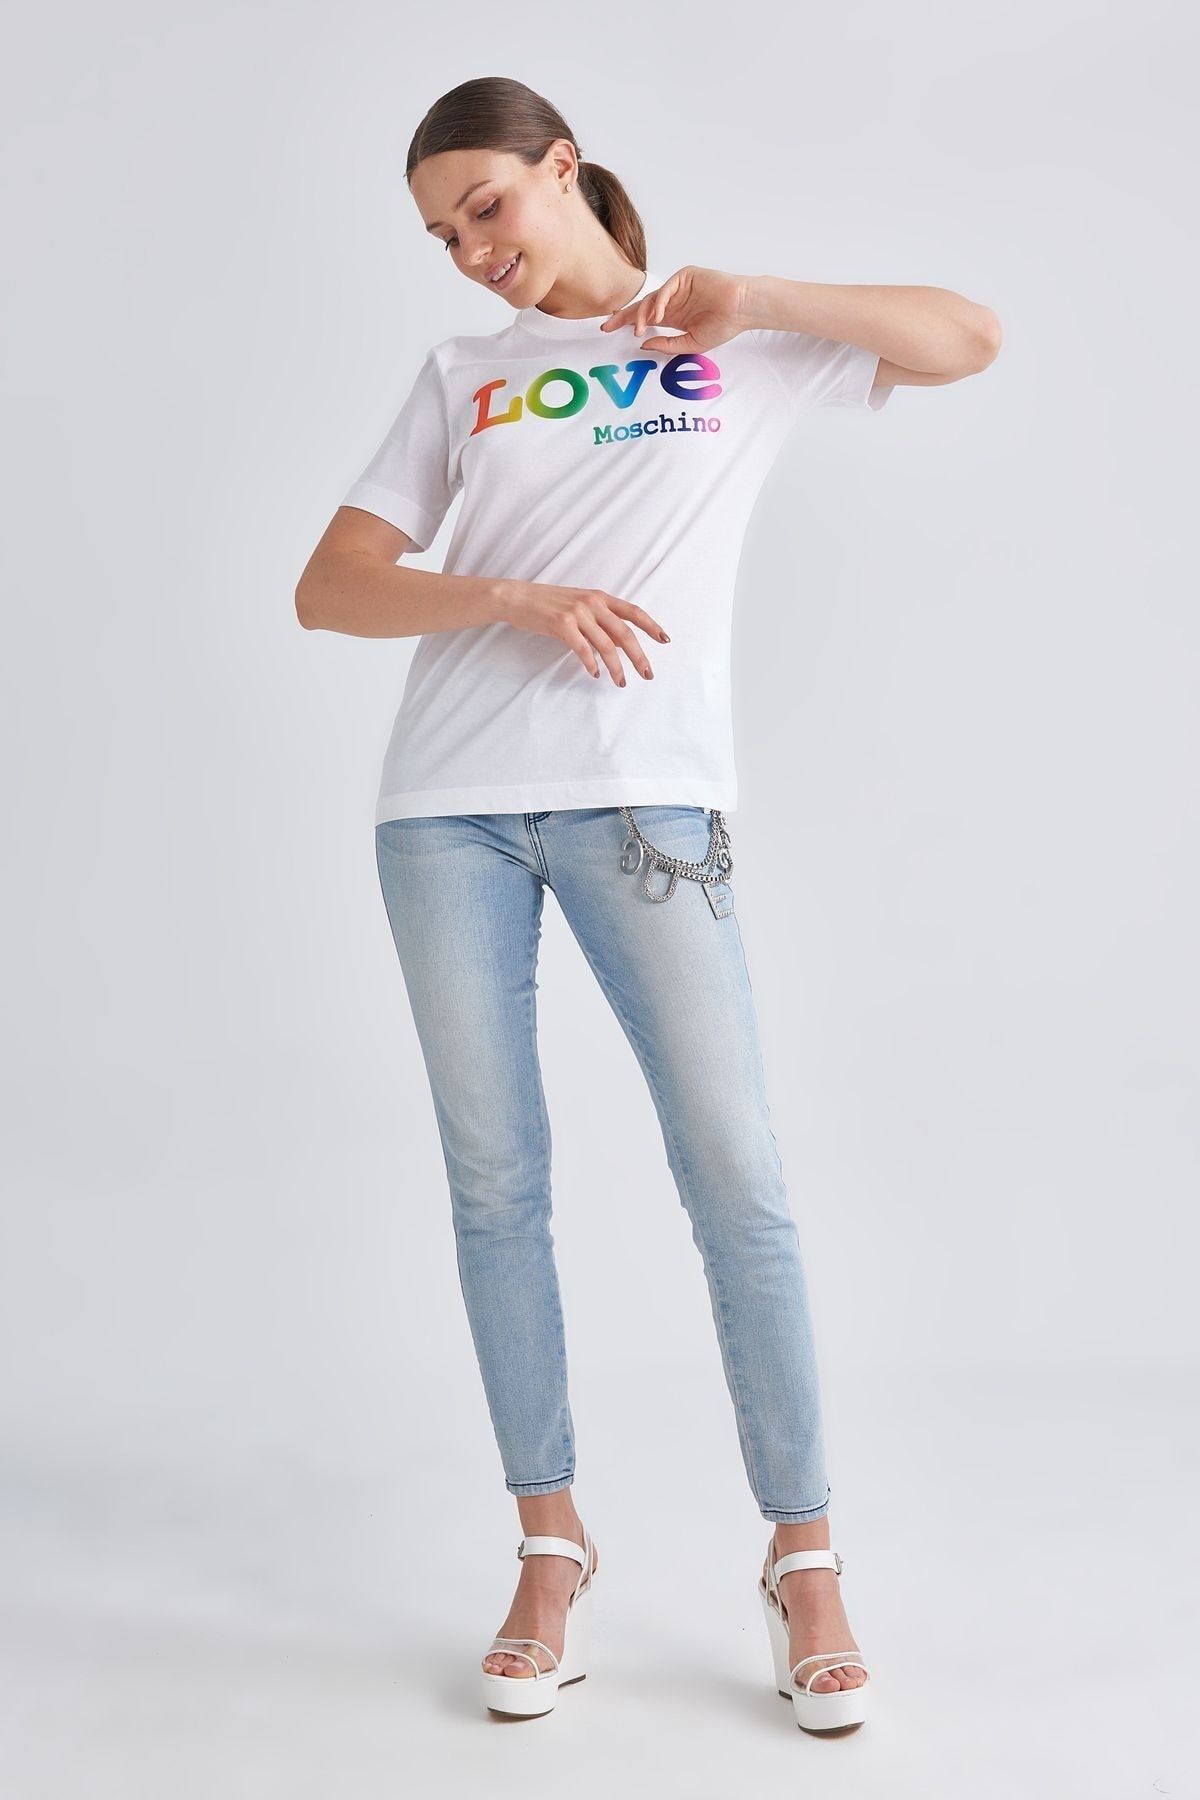 Moschino تی شرت زن چاپ شده عشق